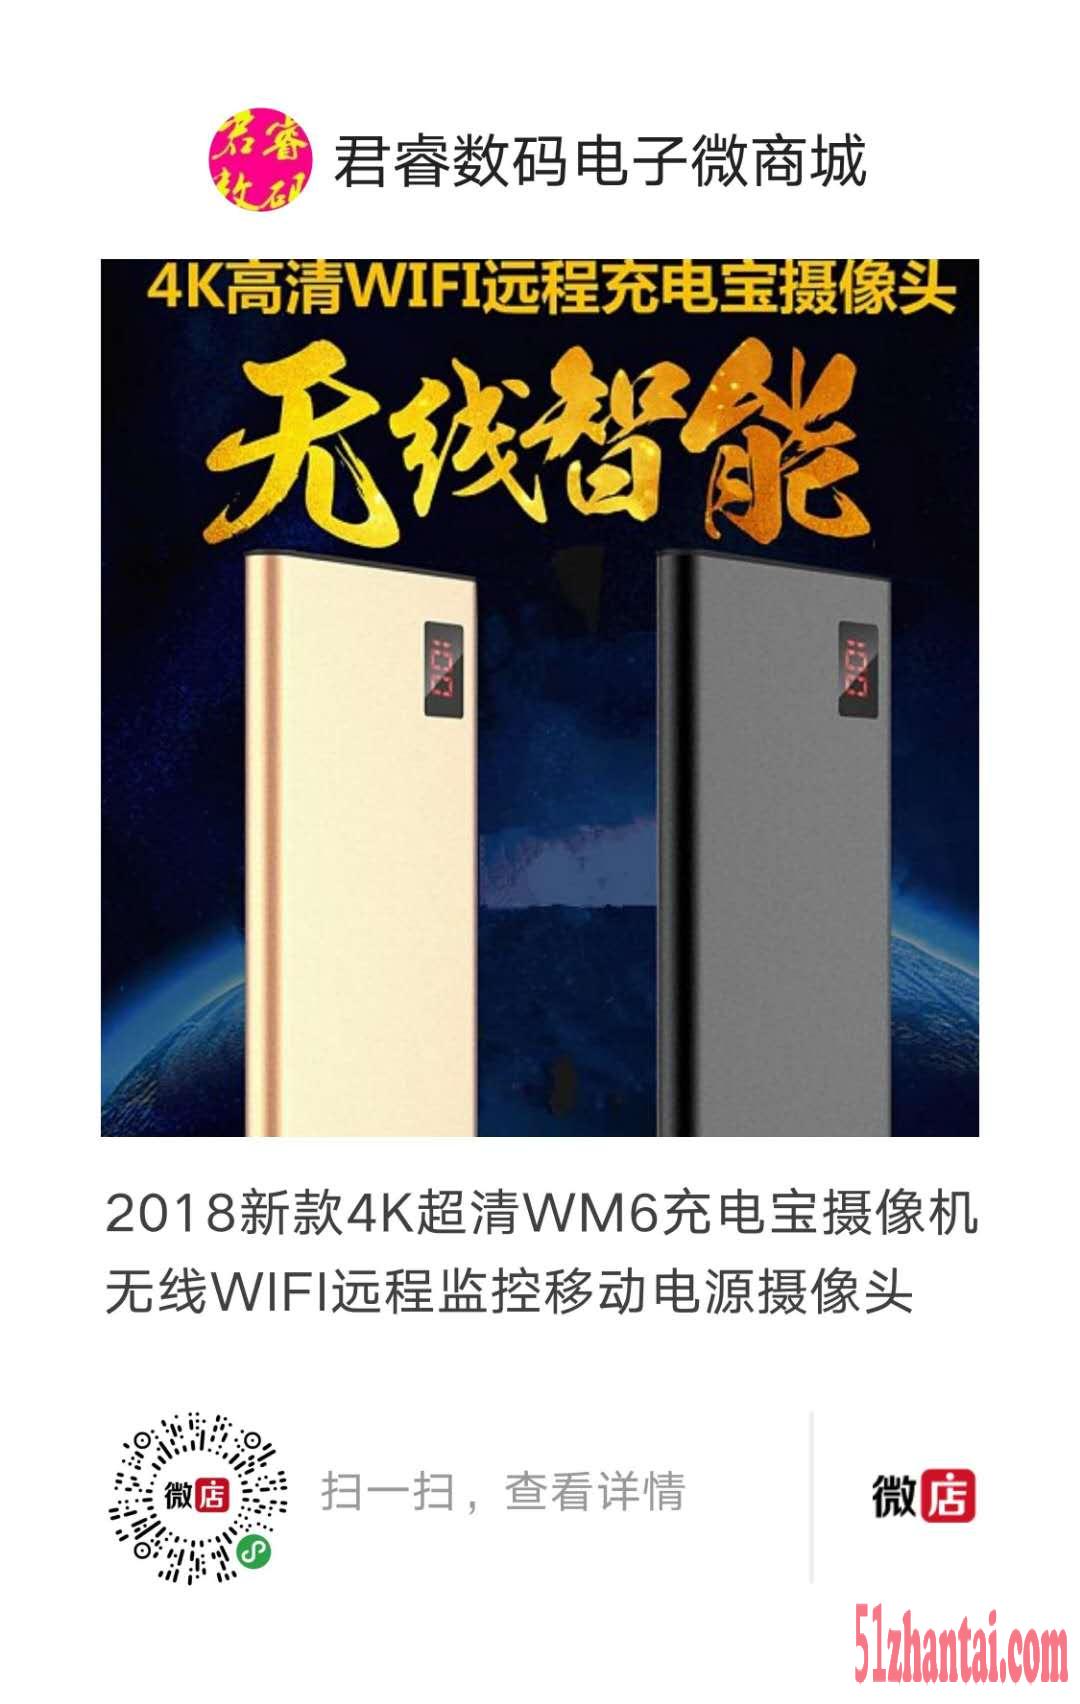 wm6充电宝式4K-WiFi家庭安防摄像机-图1